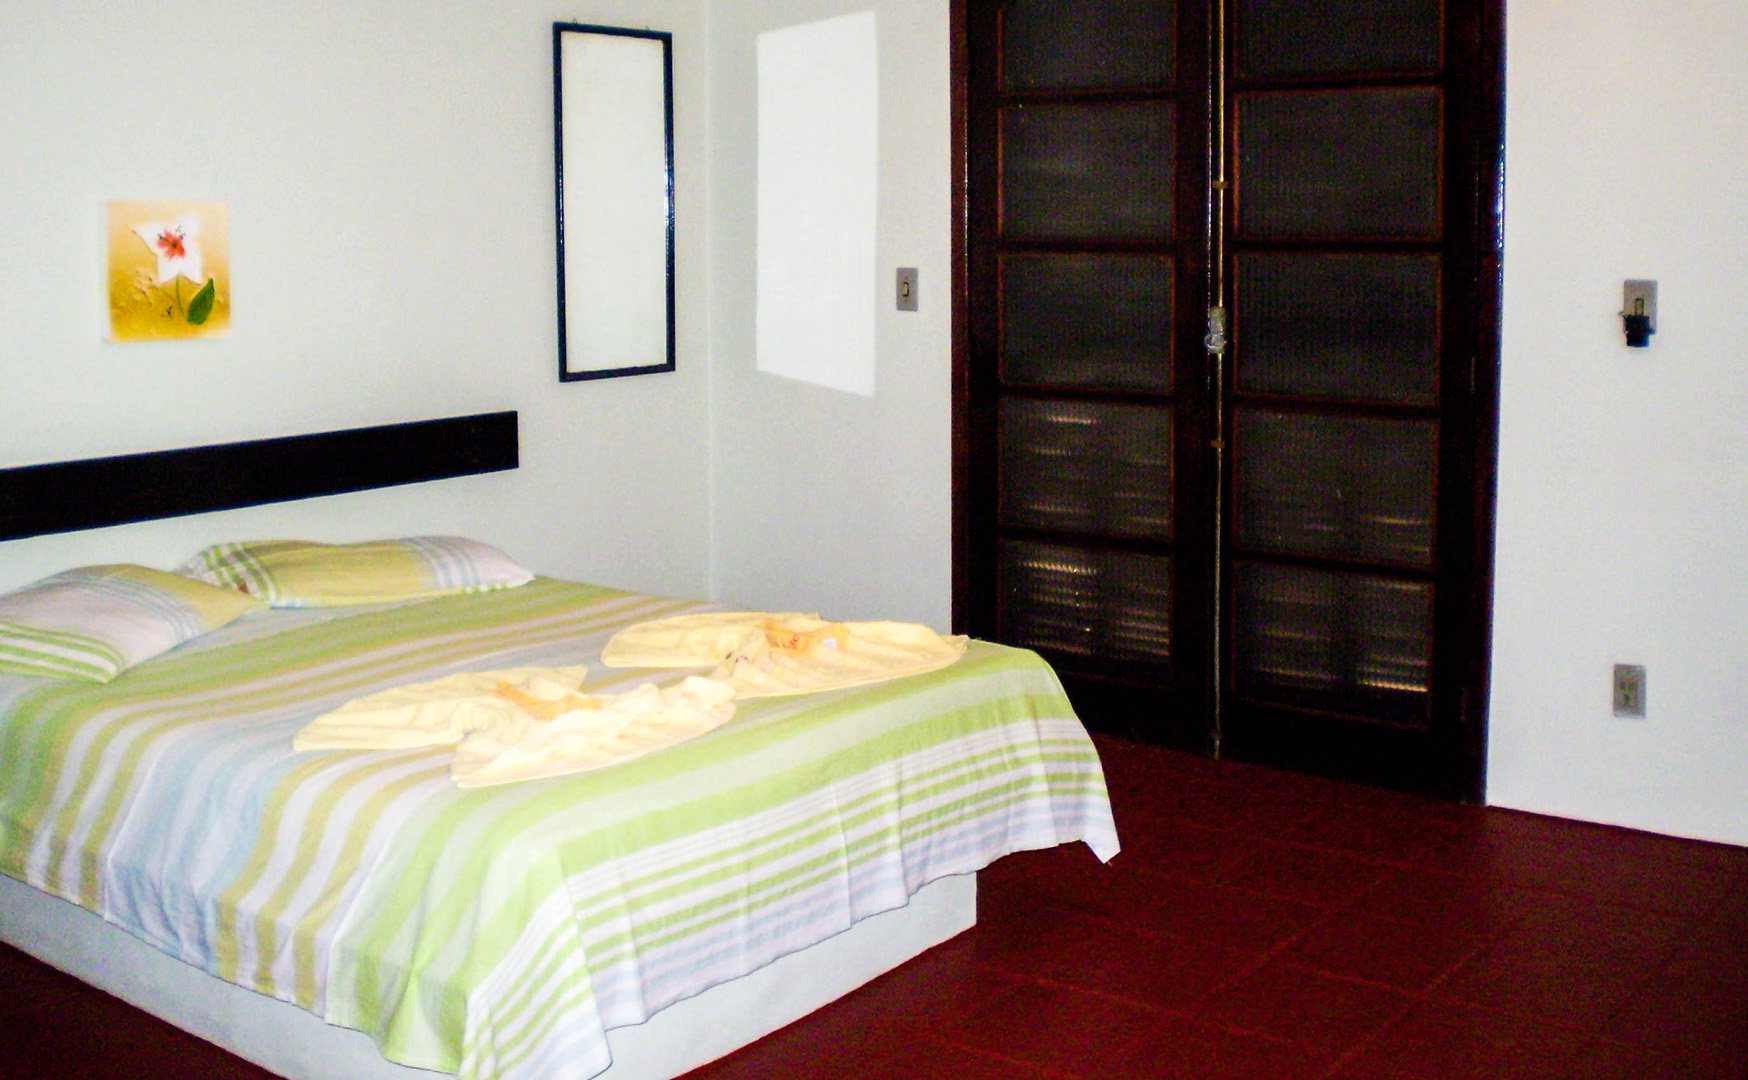 3. Apart Hotel Villas Romanas